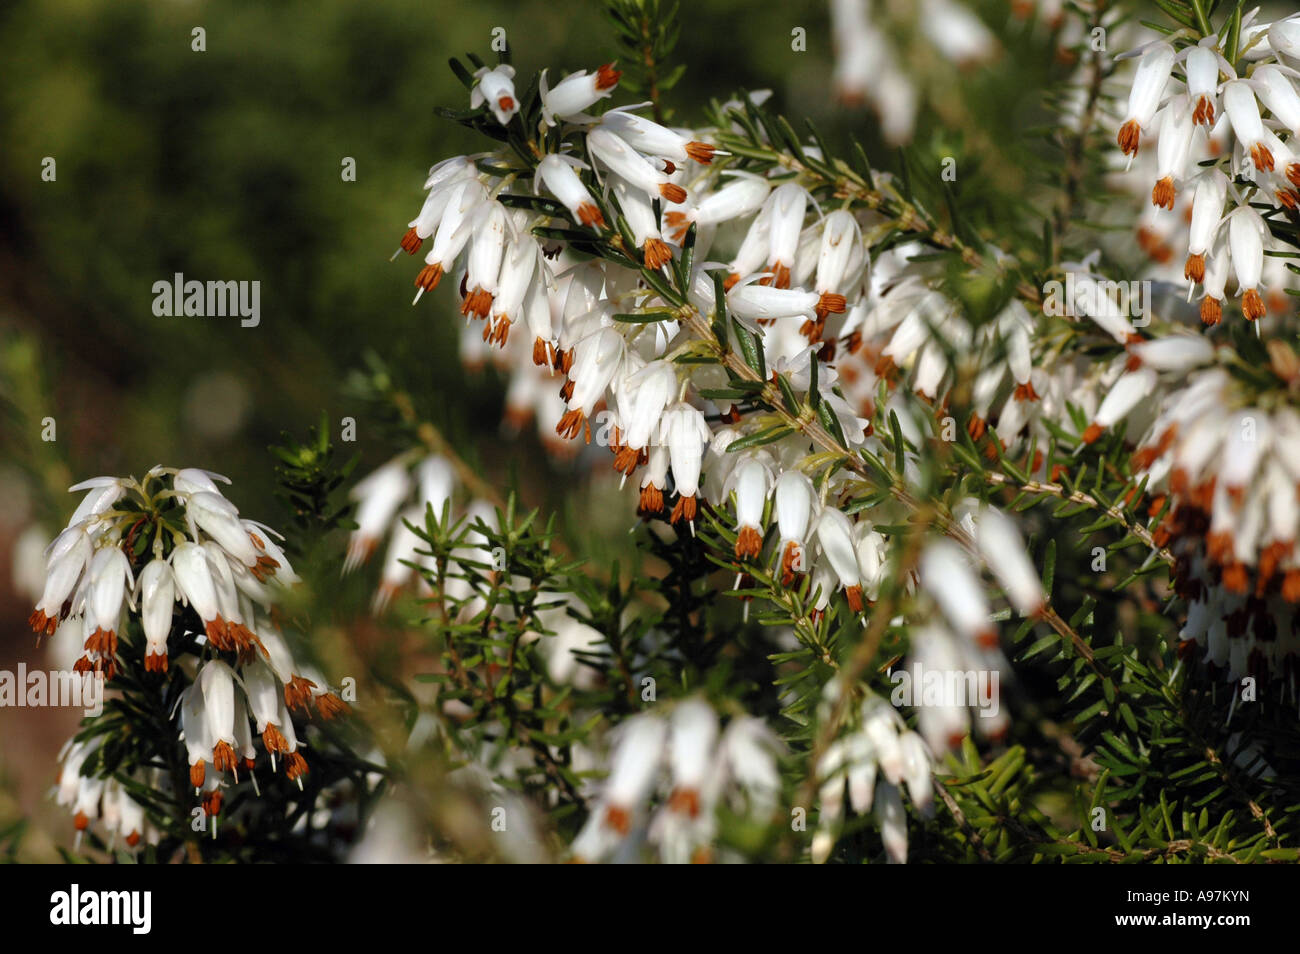 Winter heath (Erica carnea, syn. E. herbacea, E. mediterranea) also called Spring heath, variety 'Alba' Stock Photo